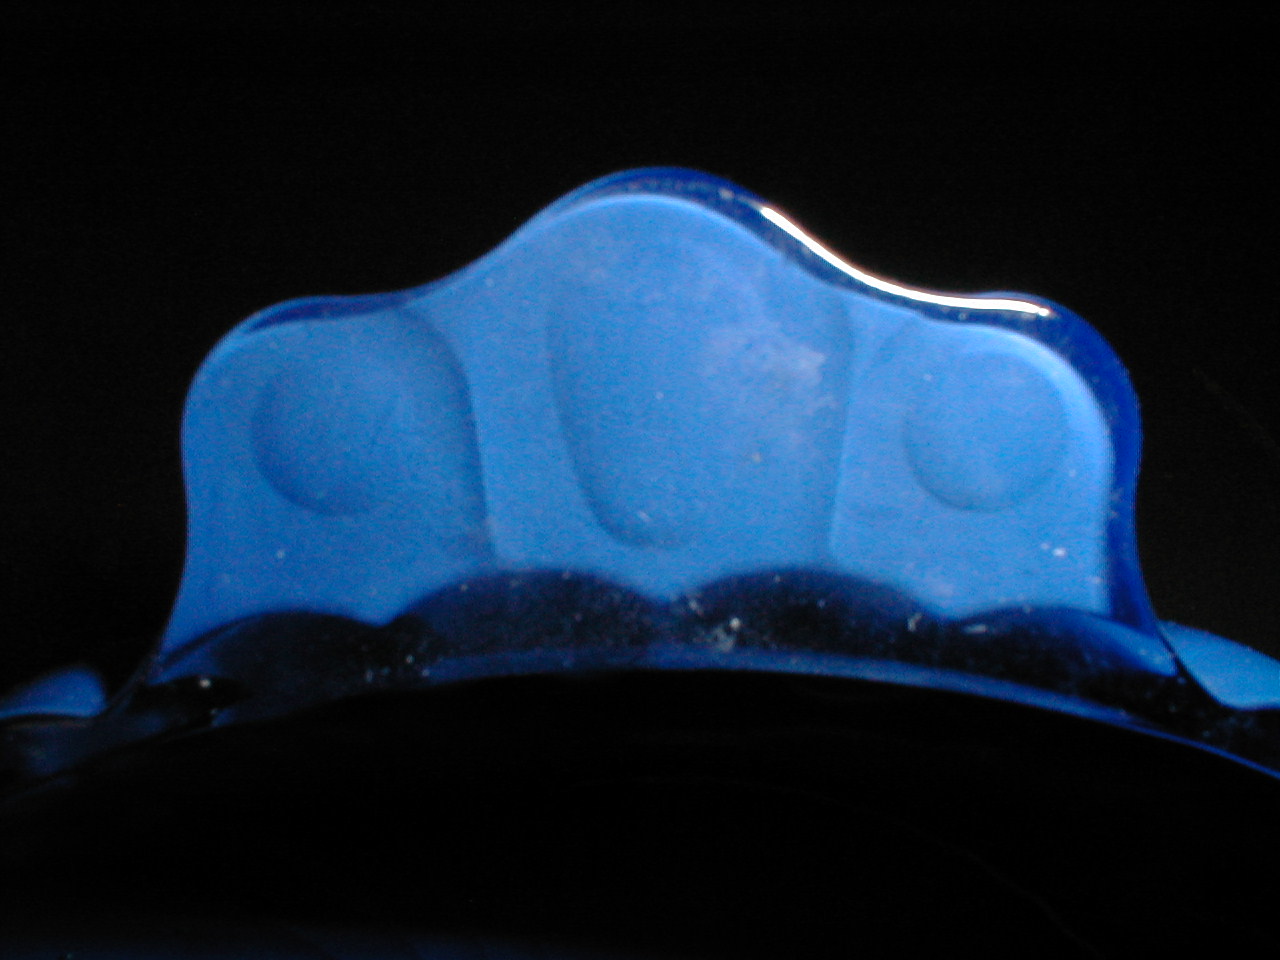 blue depression glass fired on tab handled berry sering bowl november 26 2019 016.JPG